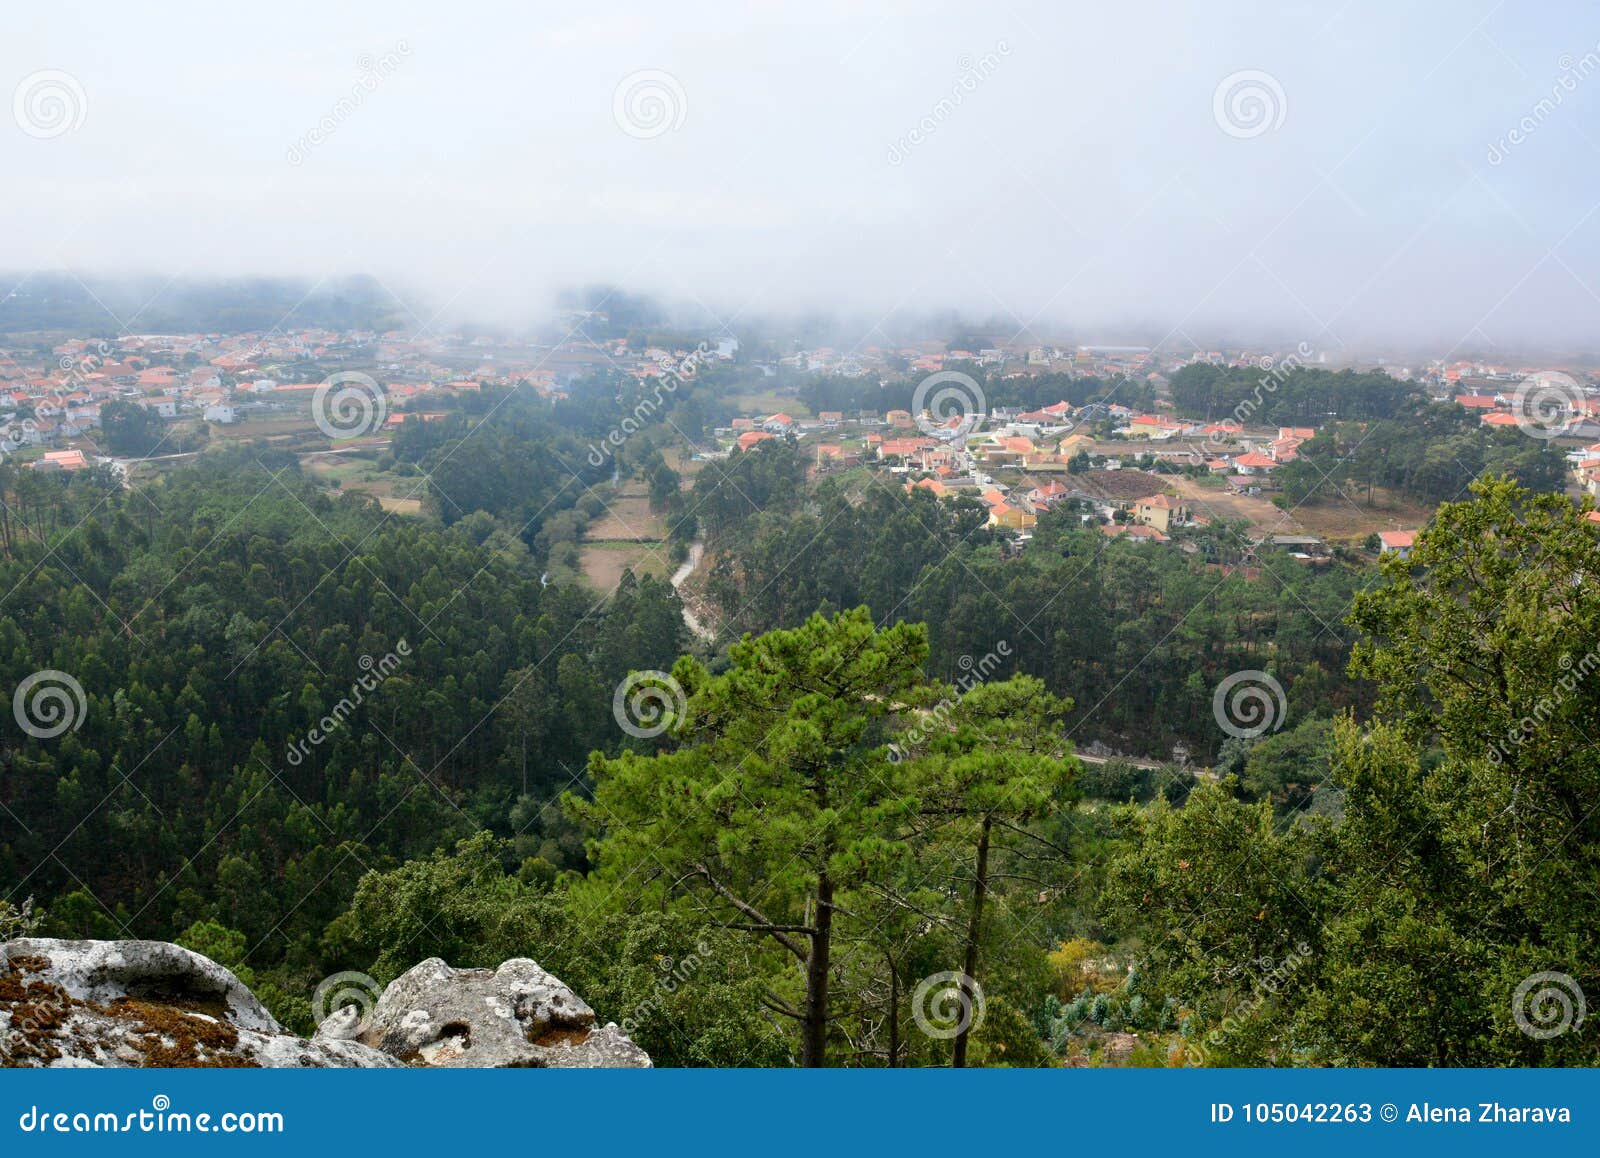 view from the castelo do neiva, way to santiago de compostela